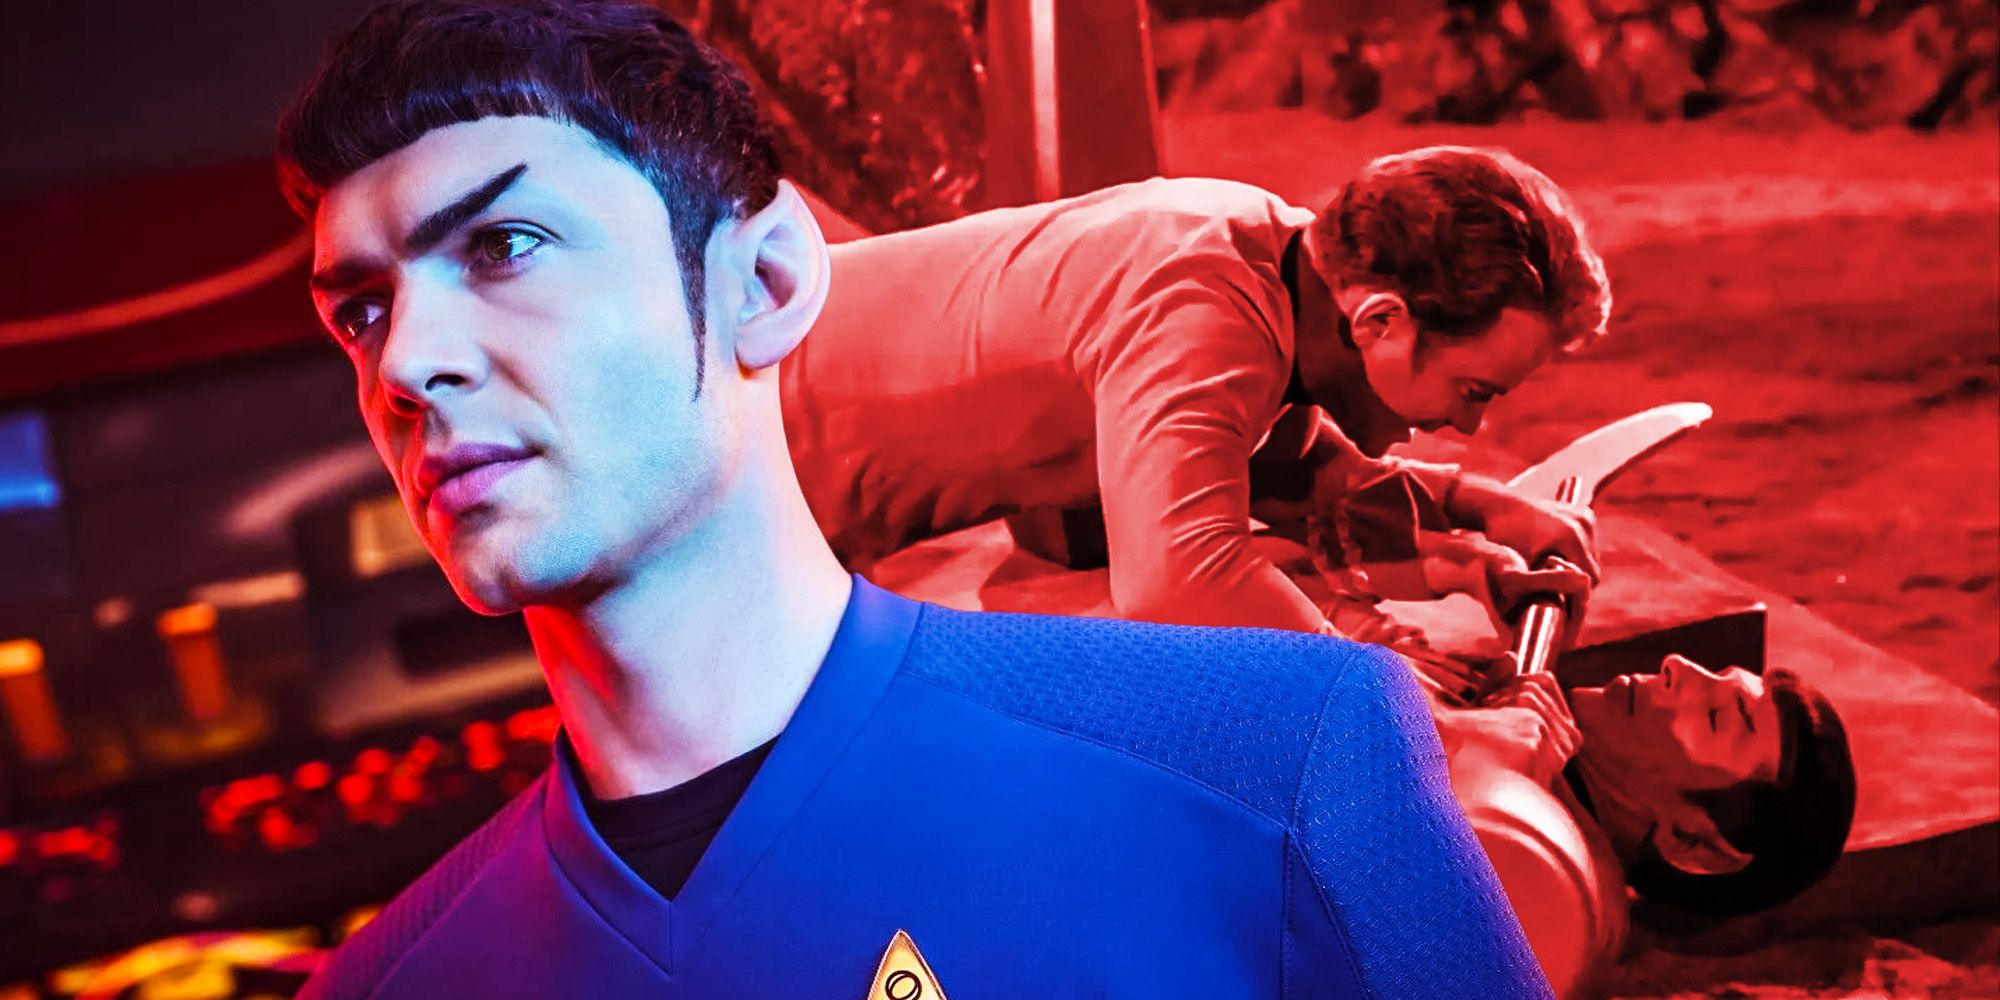 Spock strange new worlds episode explains amok time the original series